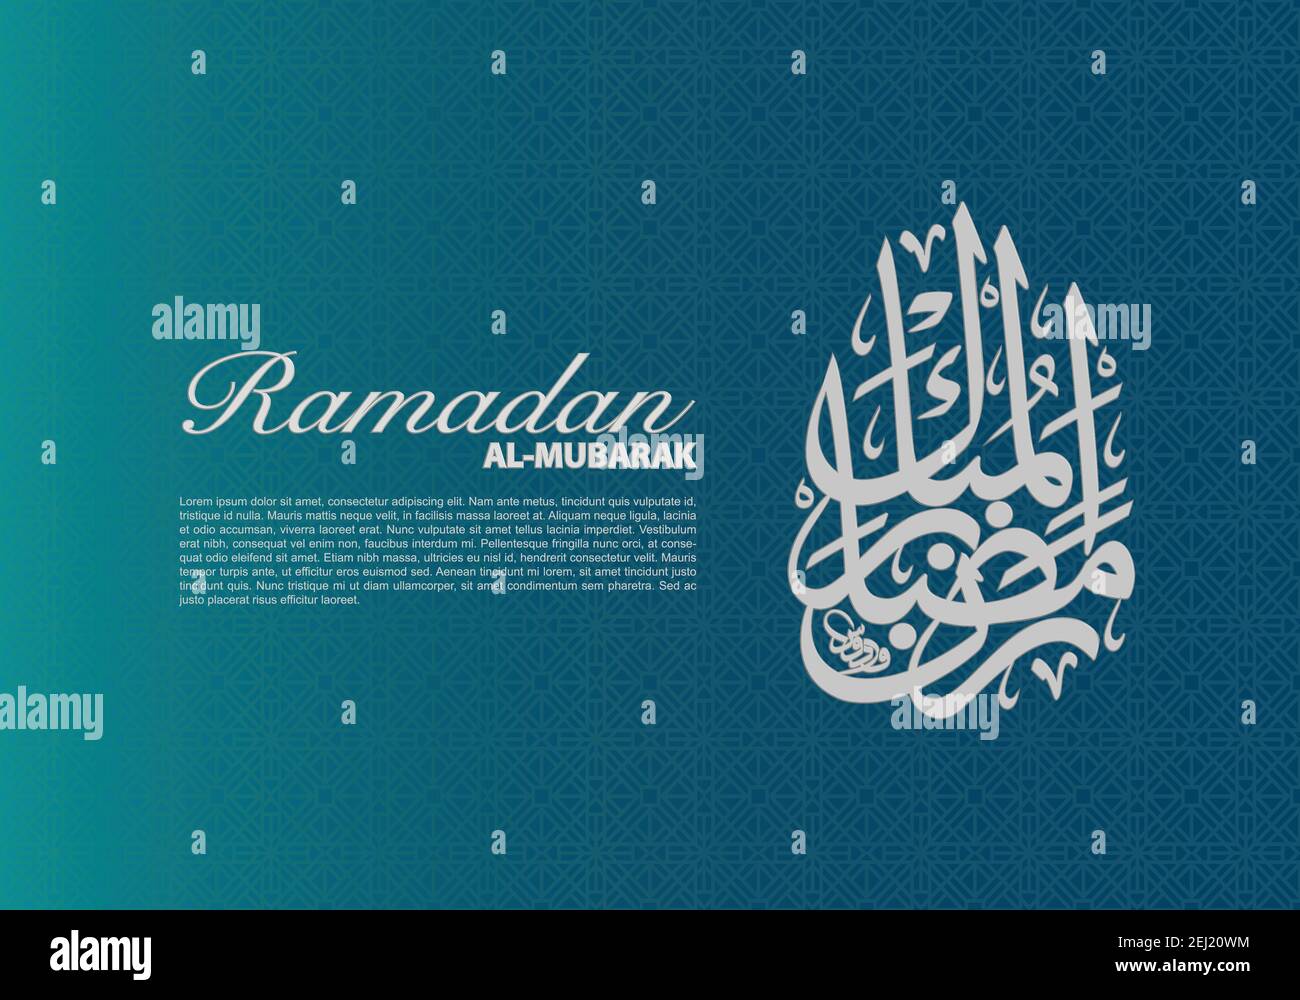 Ramadan al-Mubarak greeting card. Arabic Calligraphy art concept, 'Blessed Ramadan' in Thuluth Script, sample text and geometric pattern background. Stock Vector